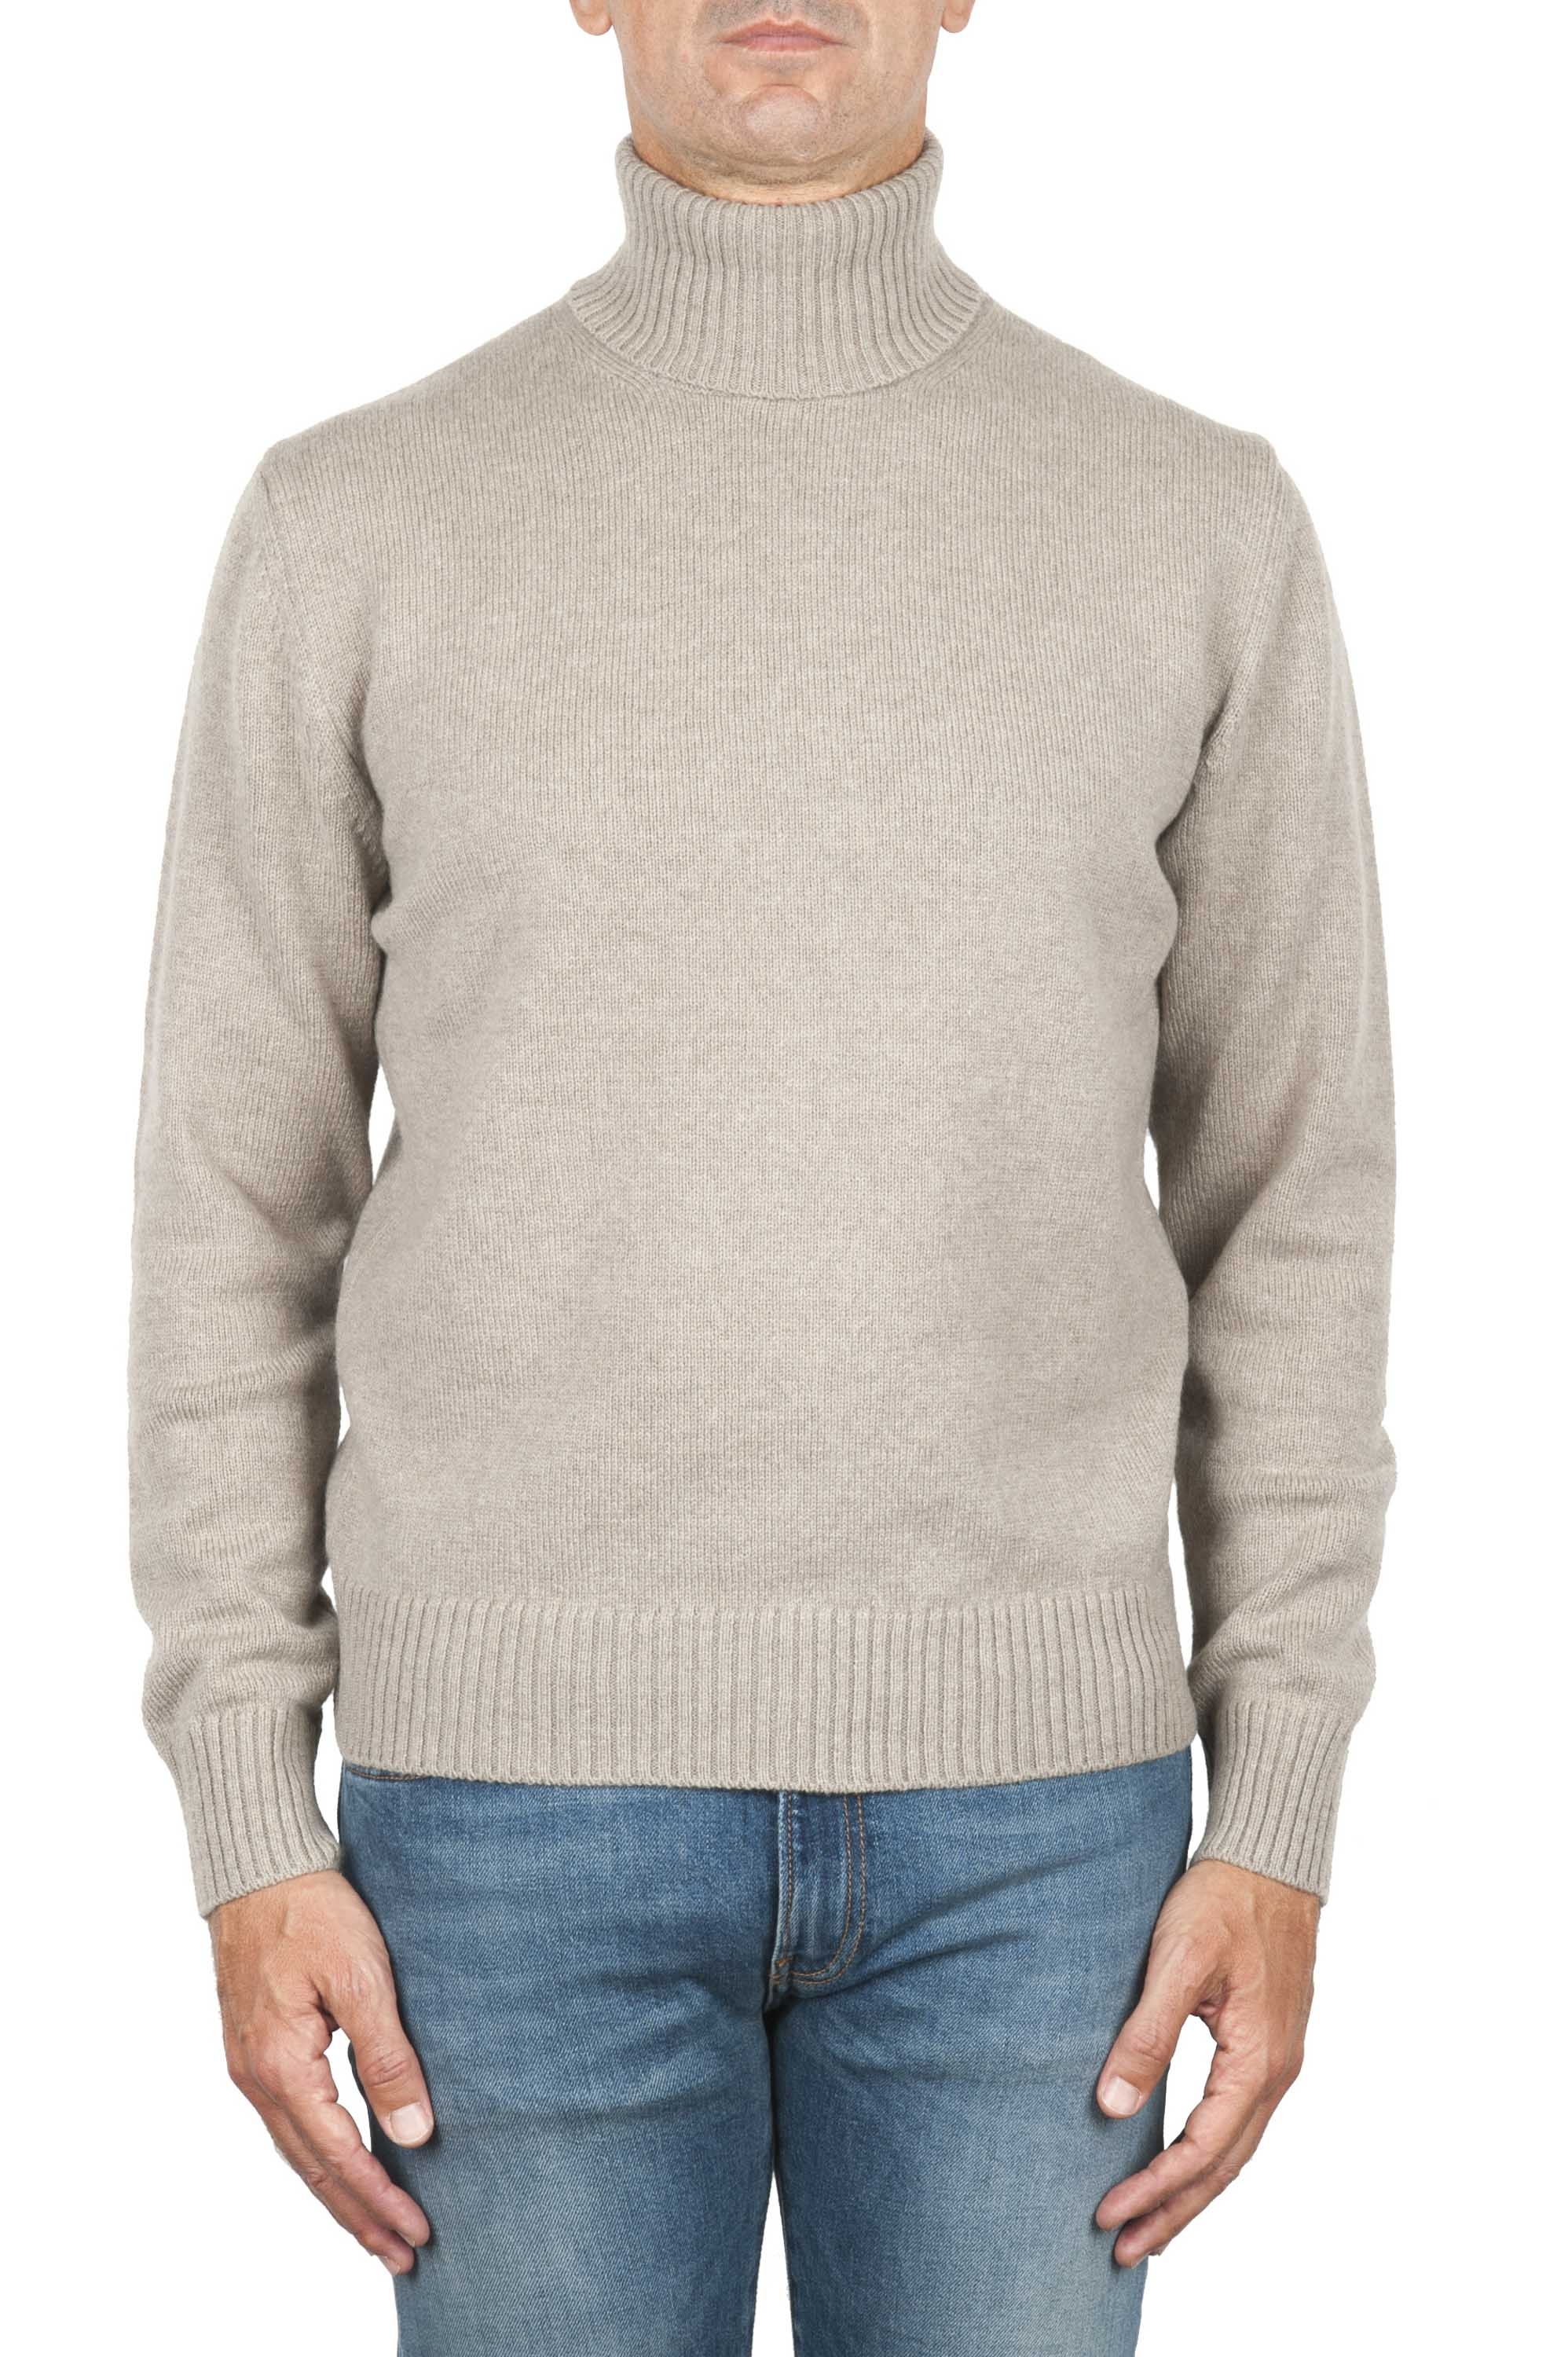 SBU 01854_19AW Beige roll-neck sweater in wool cashmere blend 01